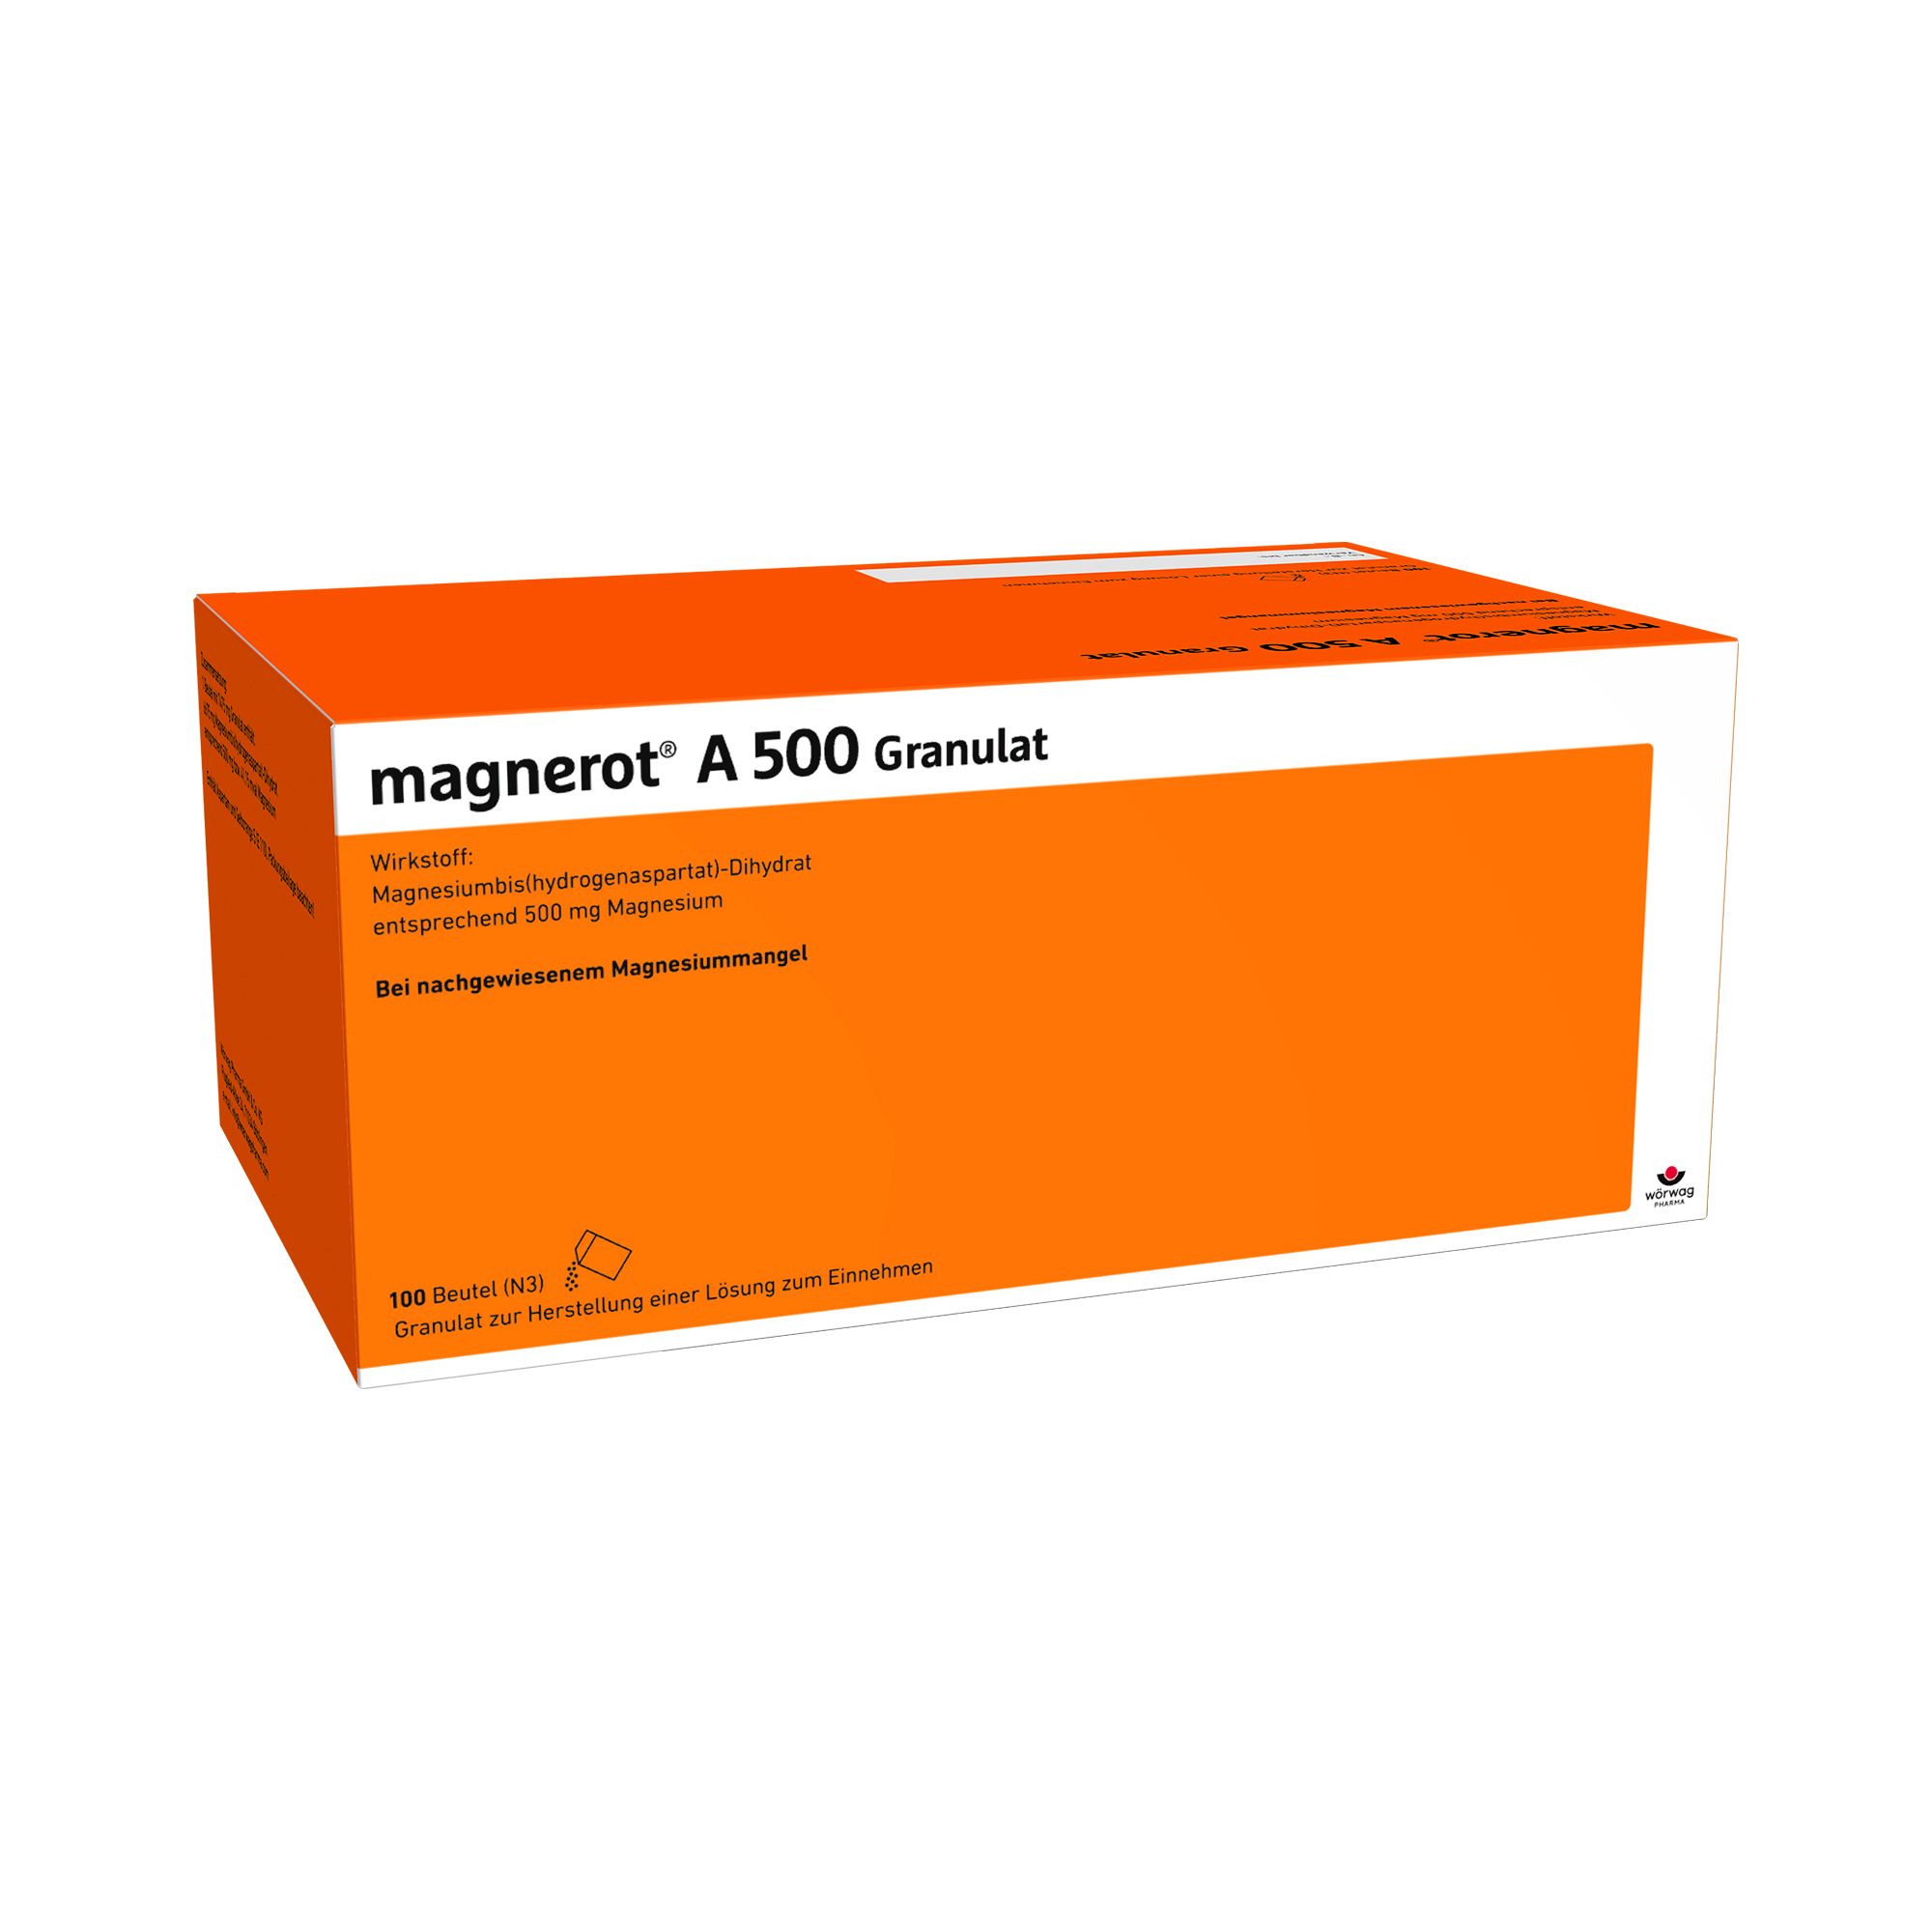 magnerot® A 500 Granulat